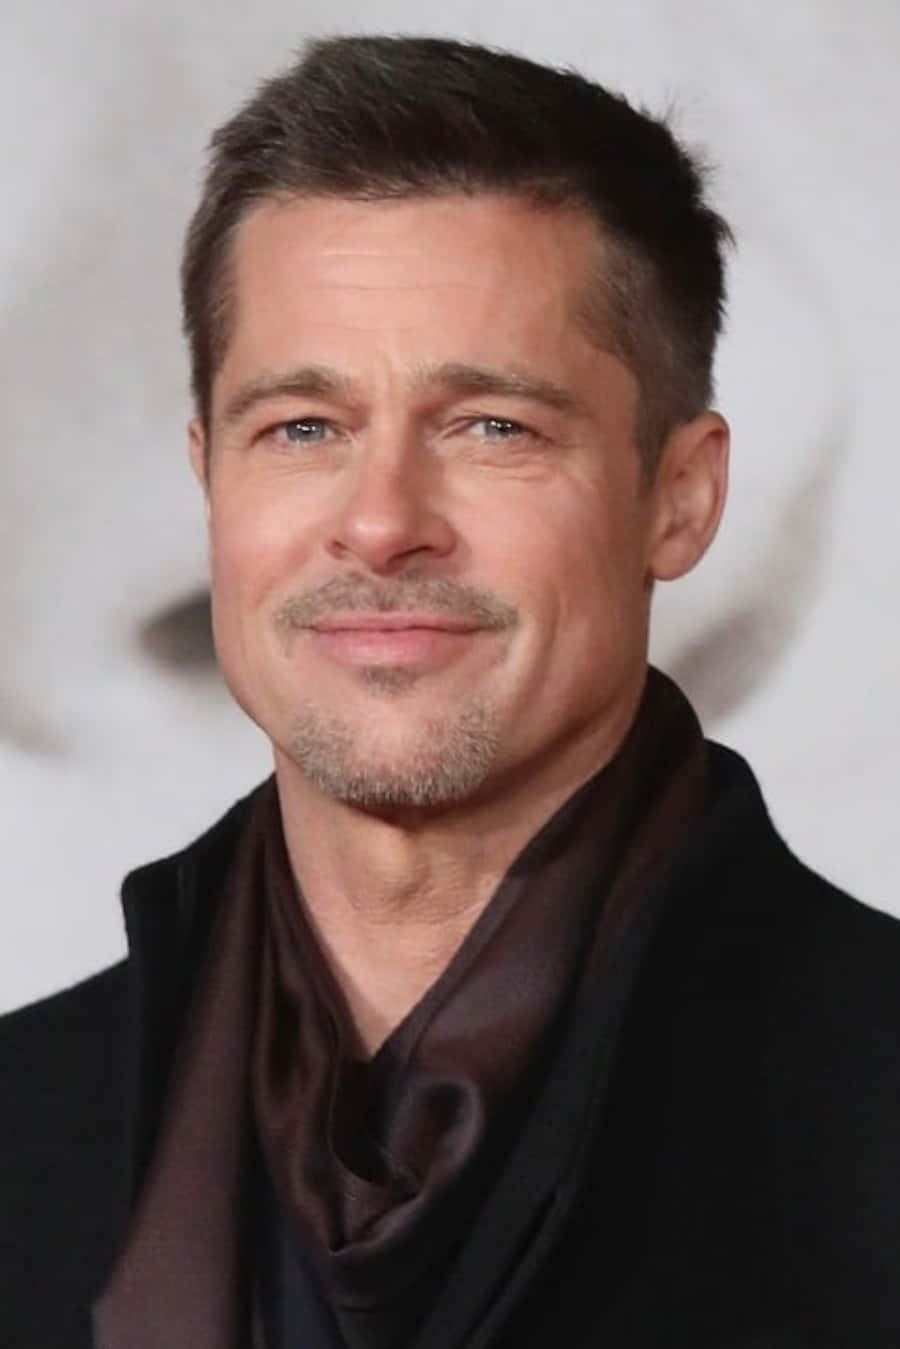 Brad Pitt, Actor and Producer